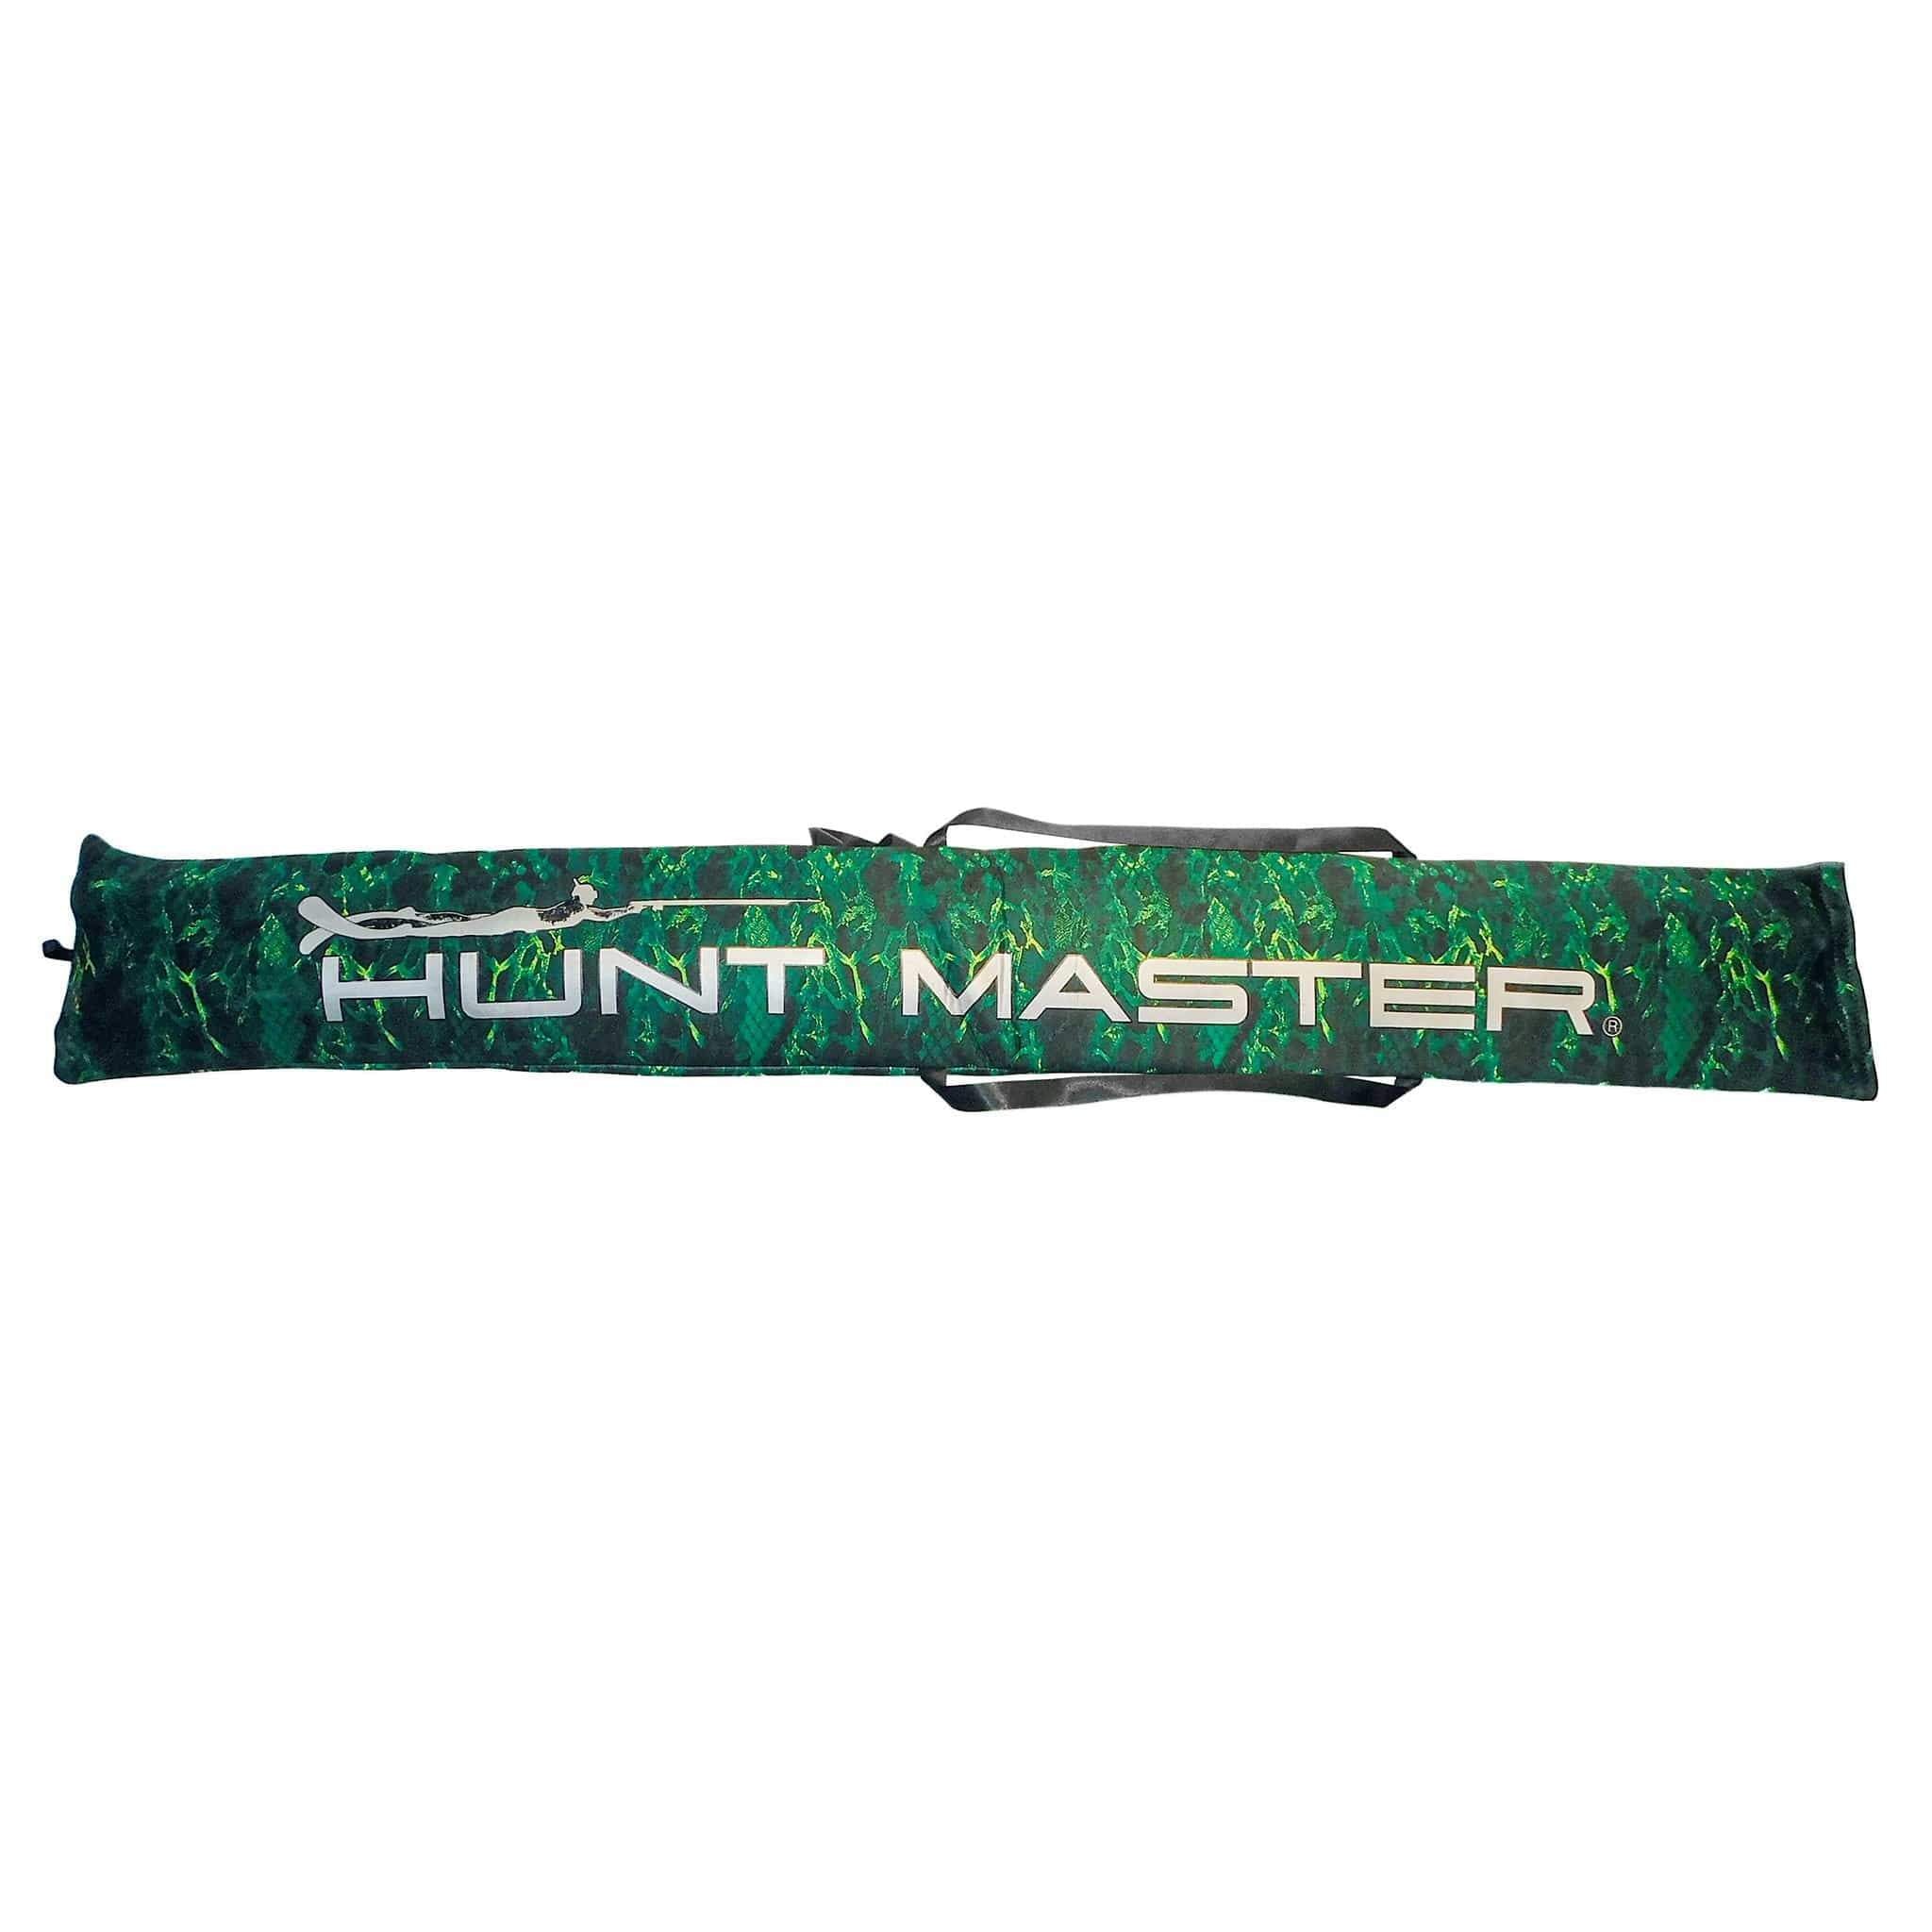 HuntMaster Green Neoprene Gun Bag - Camo Series (Green)